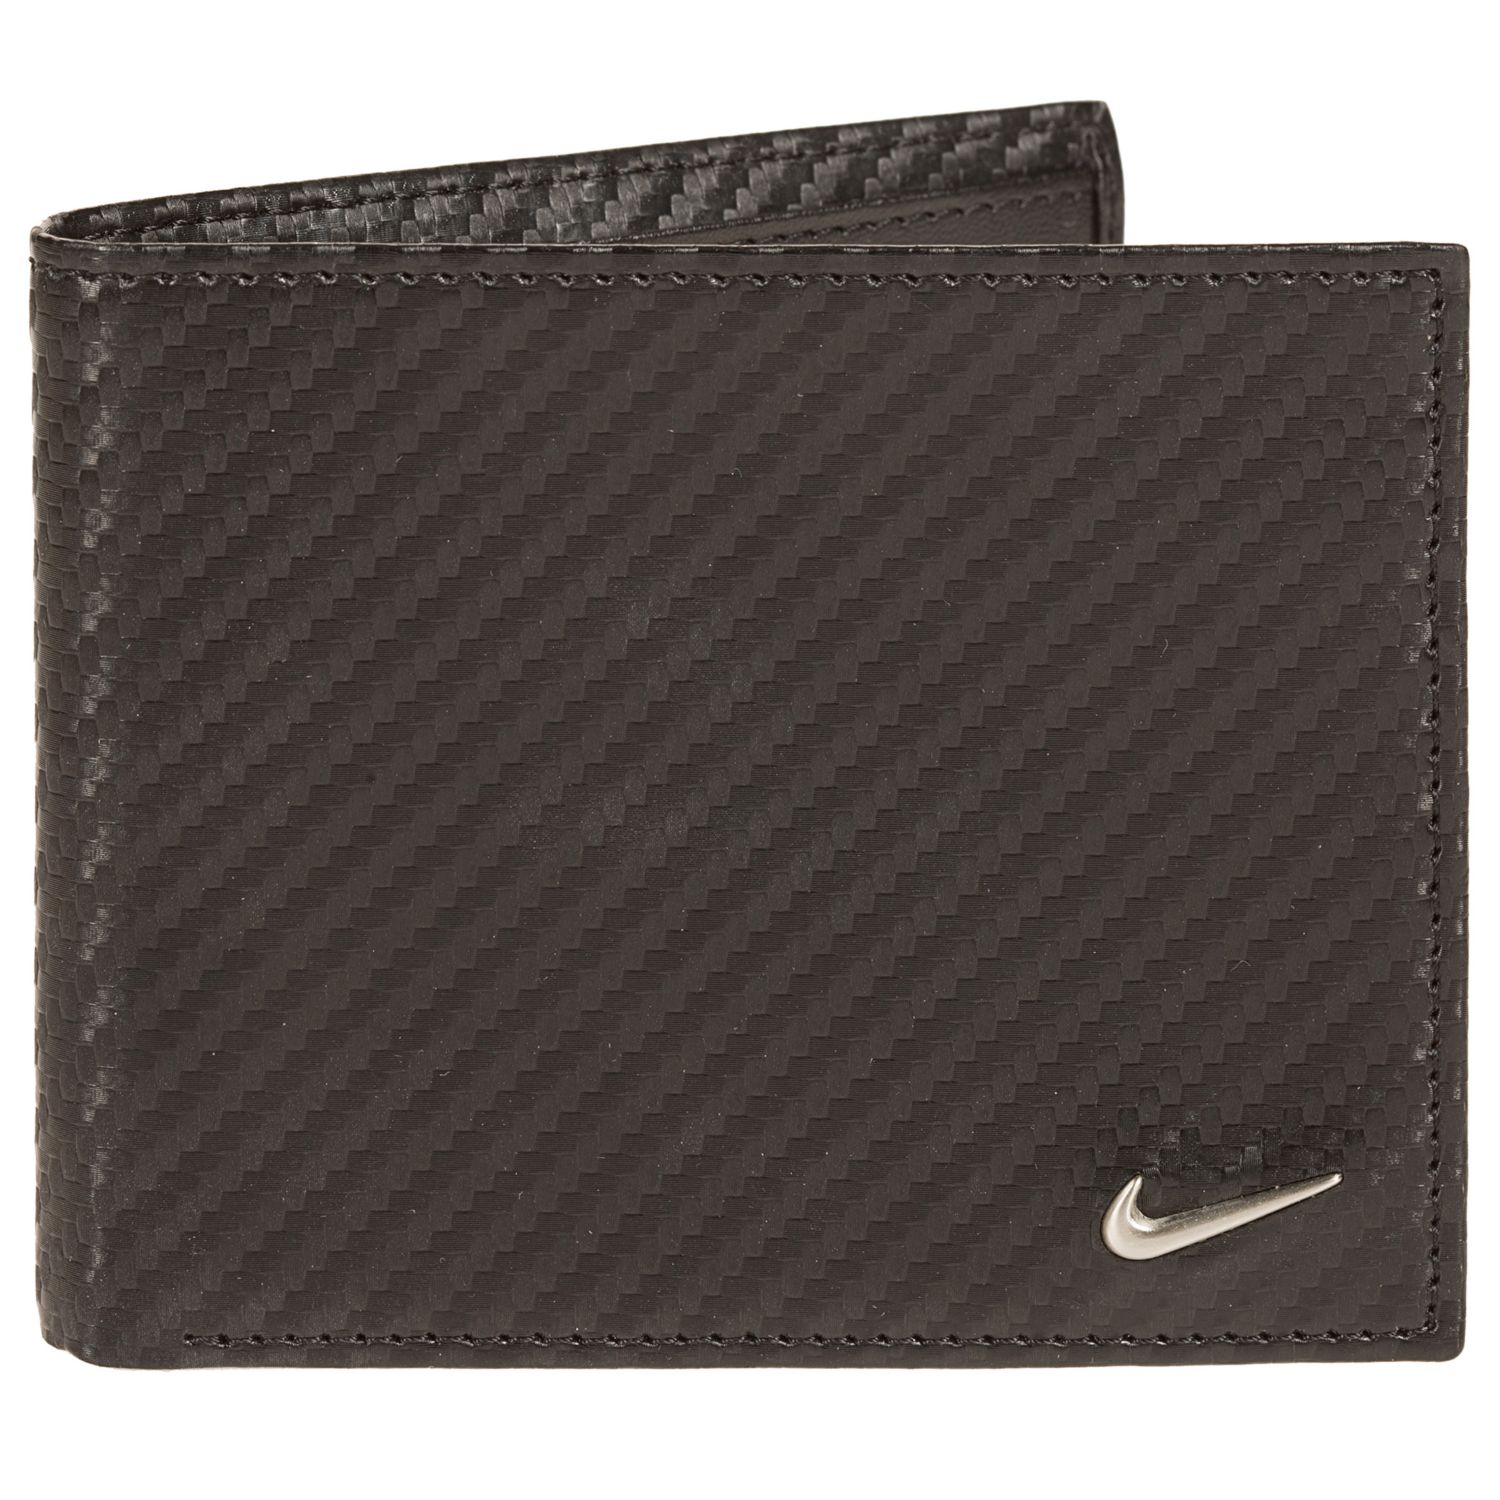 nike bifold leather wallet